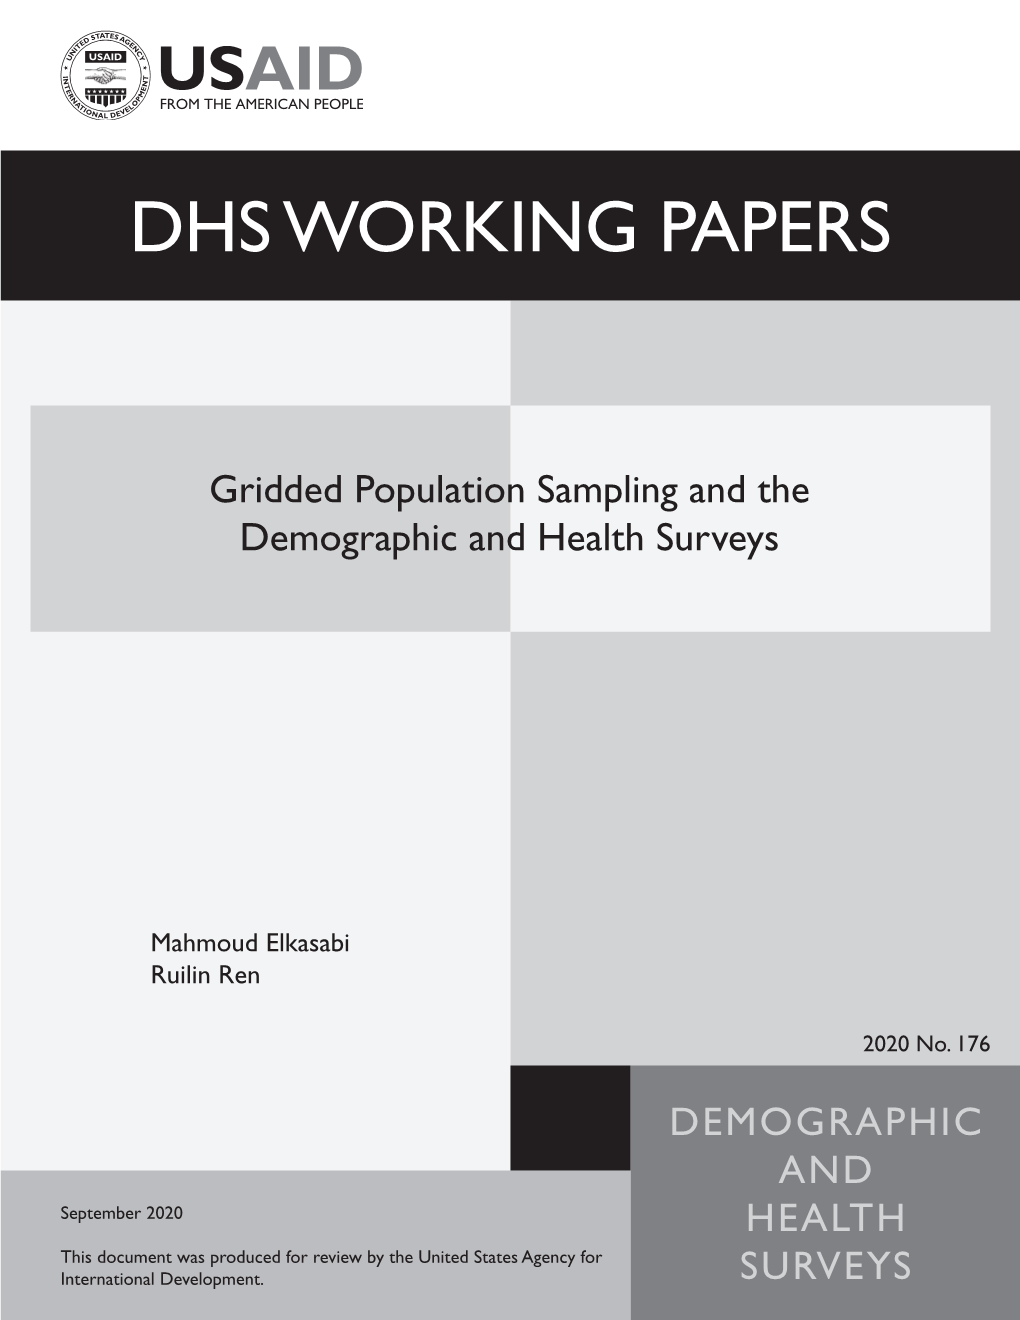 Gridded Population Sampling and the Demographic and Health Surveys